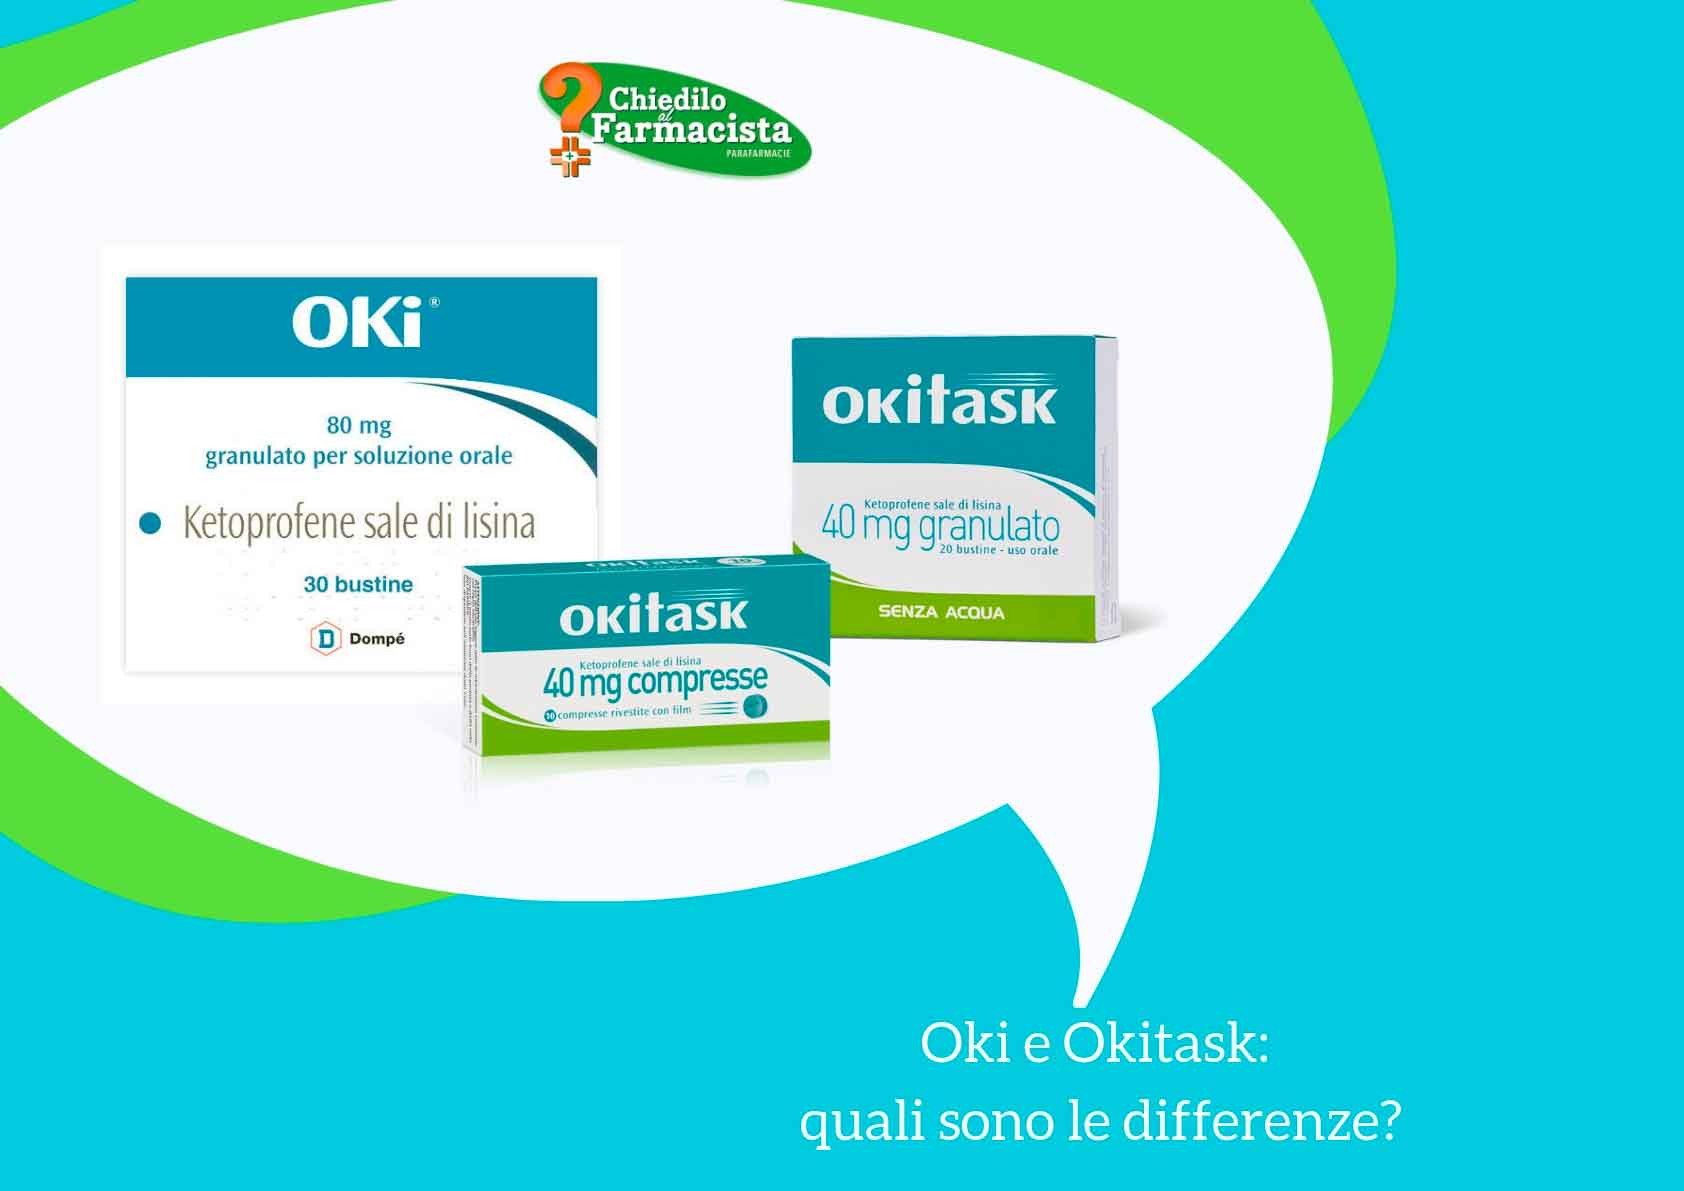 Oki e Okitask: quali sono le differenze?